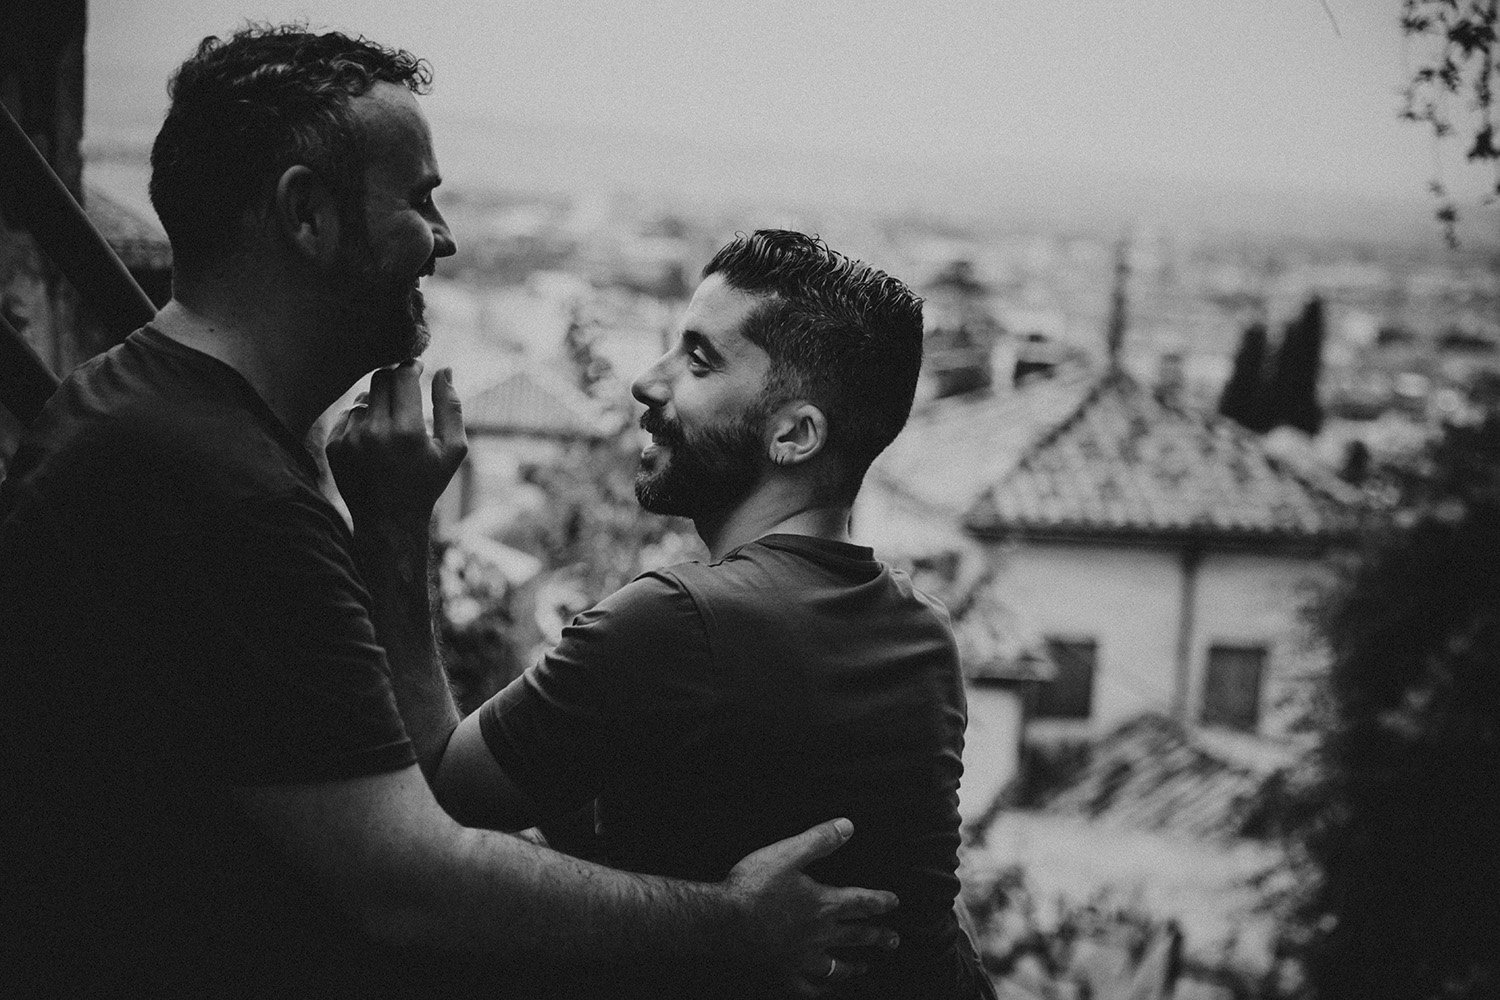 preboda-granada-serrallo-fotografo-boda-lgtb-gay-Jose_Reyes-23.jpg